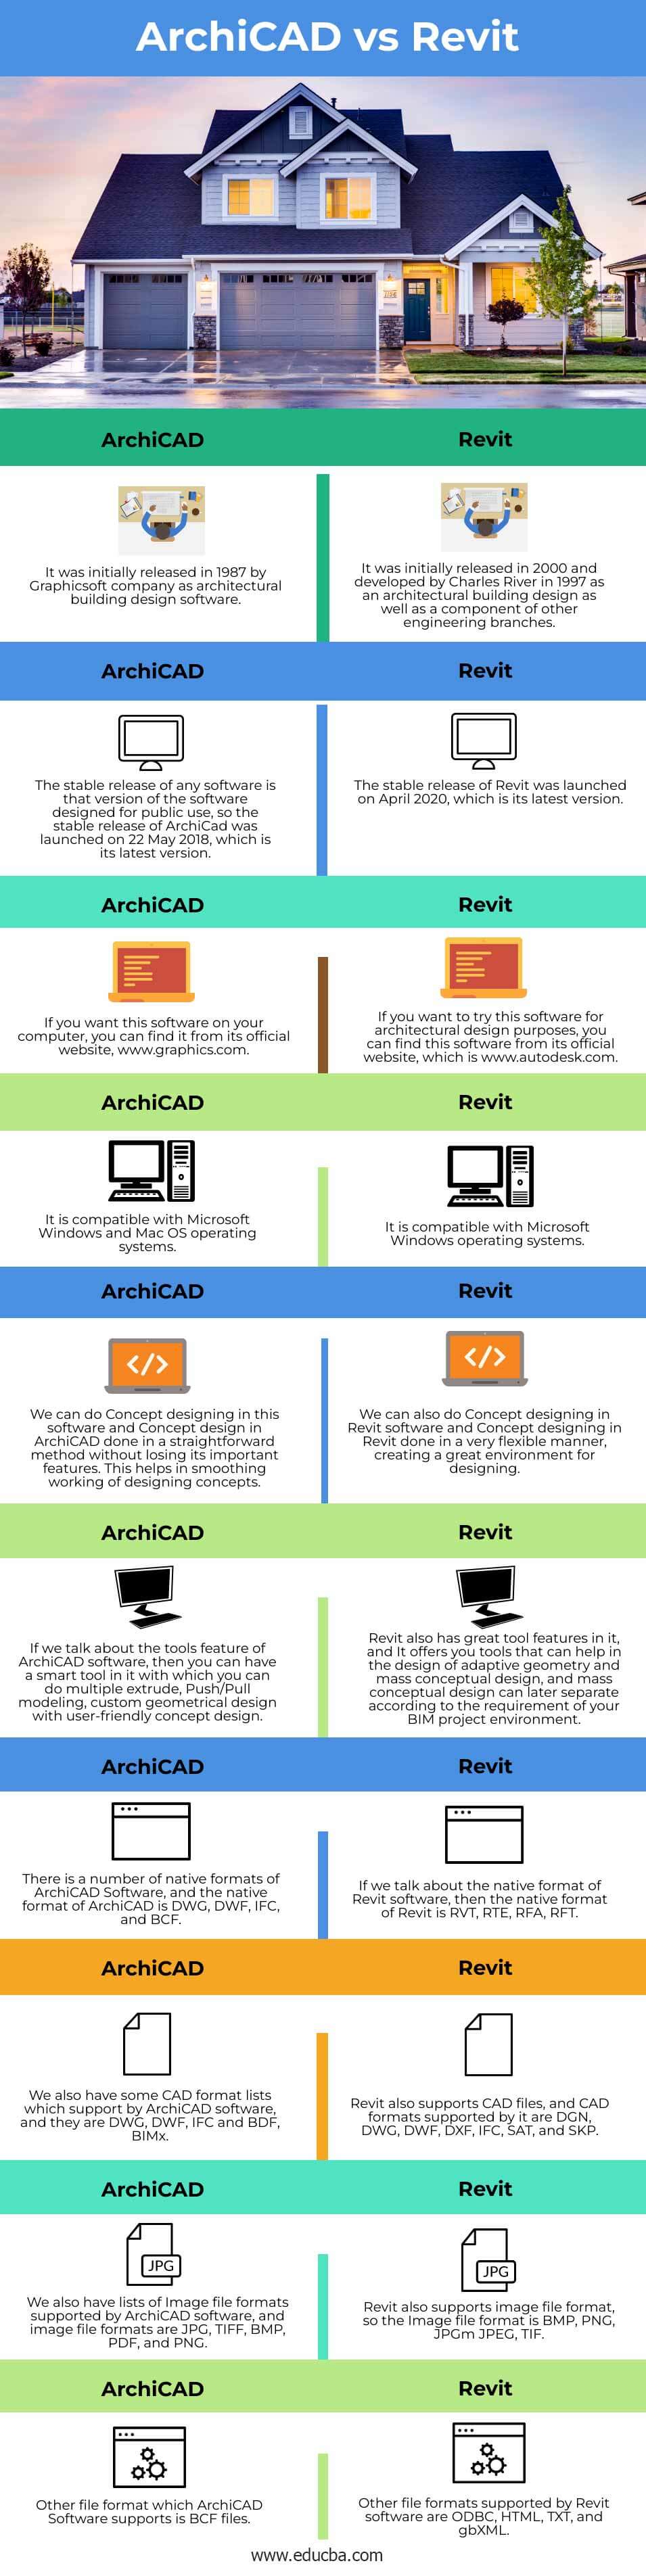 ArchiCAD-vs-Revit-info